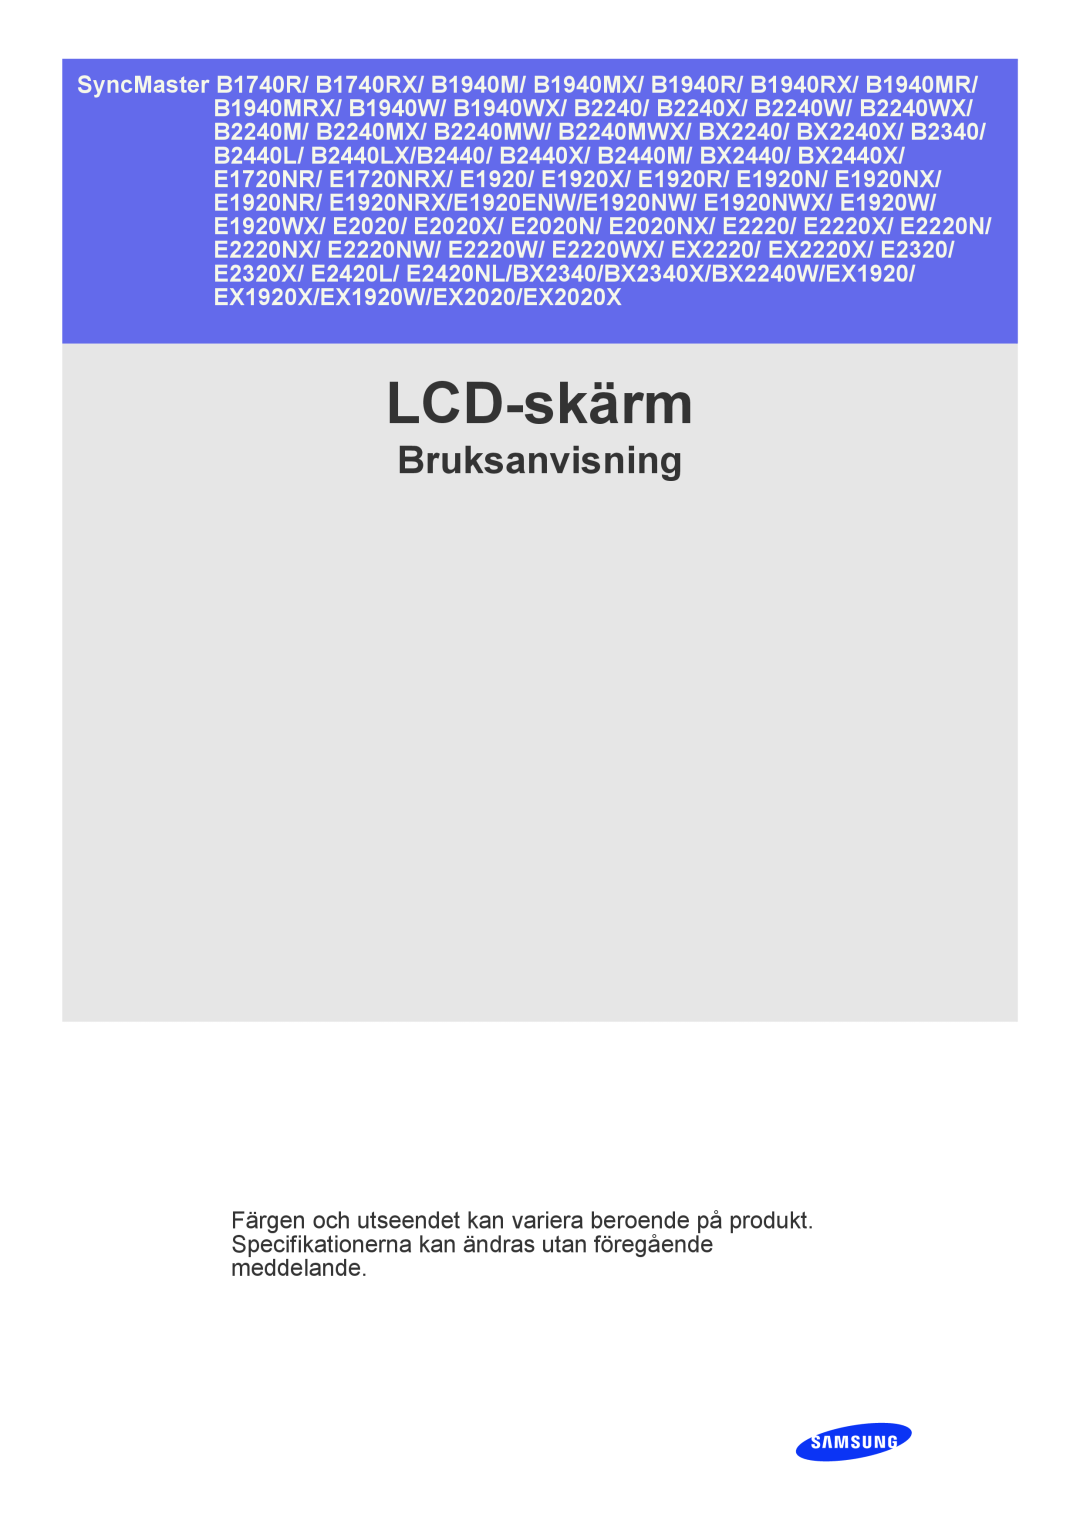 Samsung LS22CLZSB/EN, LS19CBRMS/EN, LS19CBBMS/EN, LS22CBRMSV/EN, LS19CLASSUEN, LS22CBKMSV/EN manual LCD-skärm, Bruksanvisning 